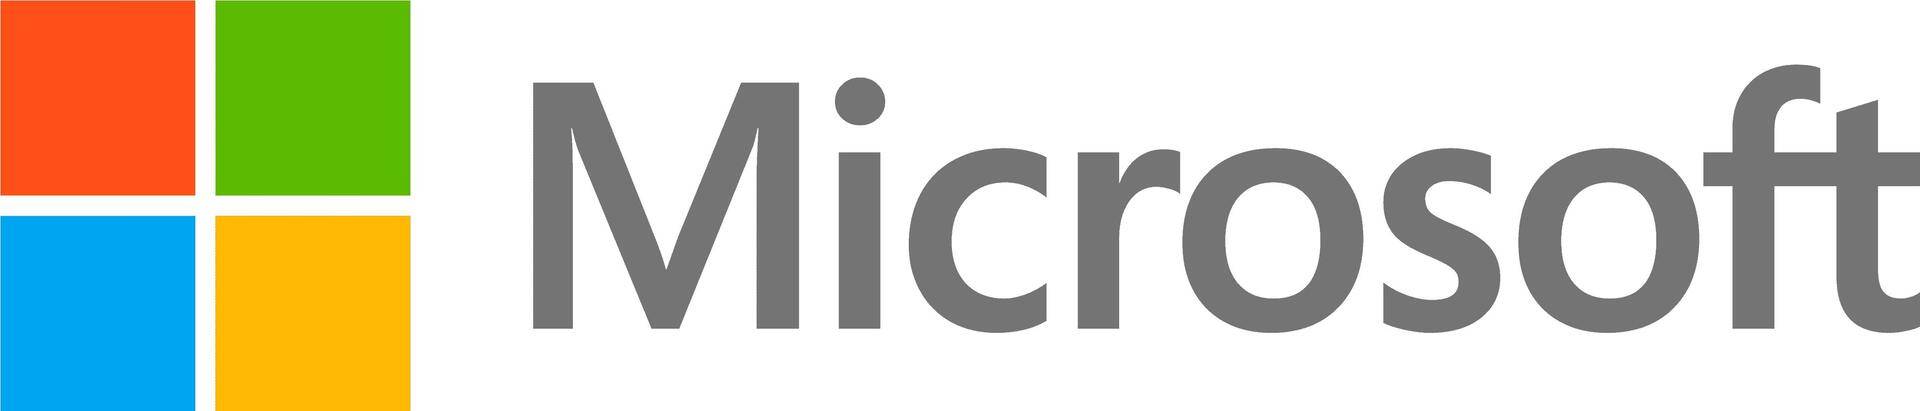 Microsoft DG7GMGF0D65N.0003 Software-Lizenz/-Upgrade 1 Lizenz(en) (DG7GMGF0D65N.0003) von Microsoft